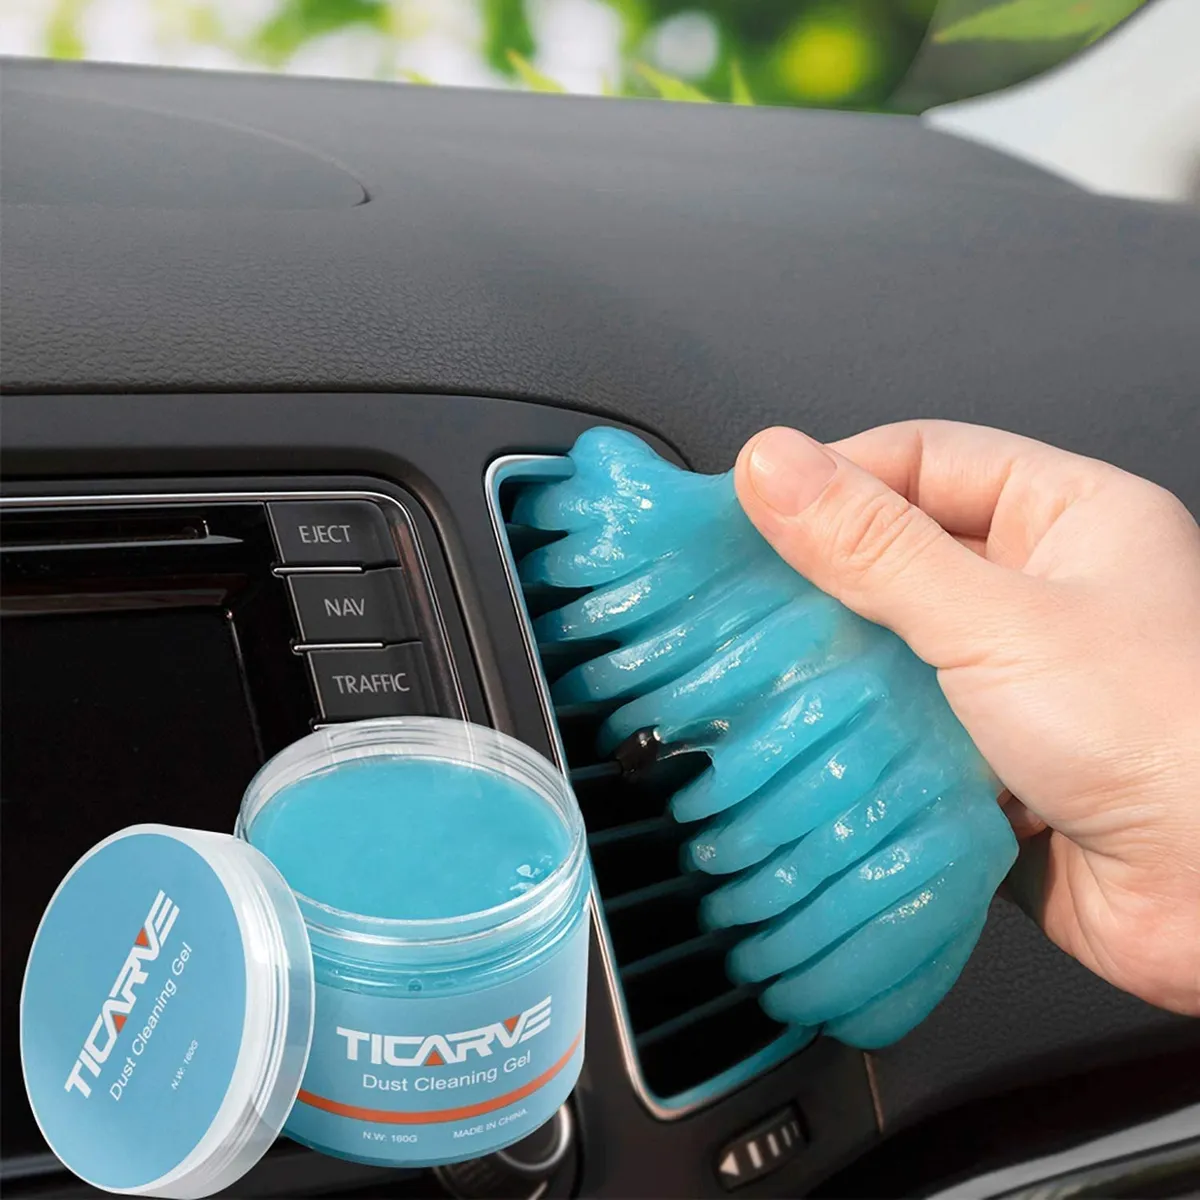 TICARVE cleaning gel for car